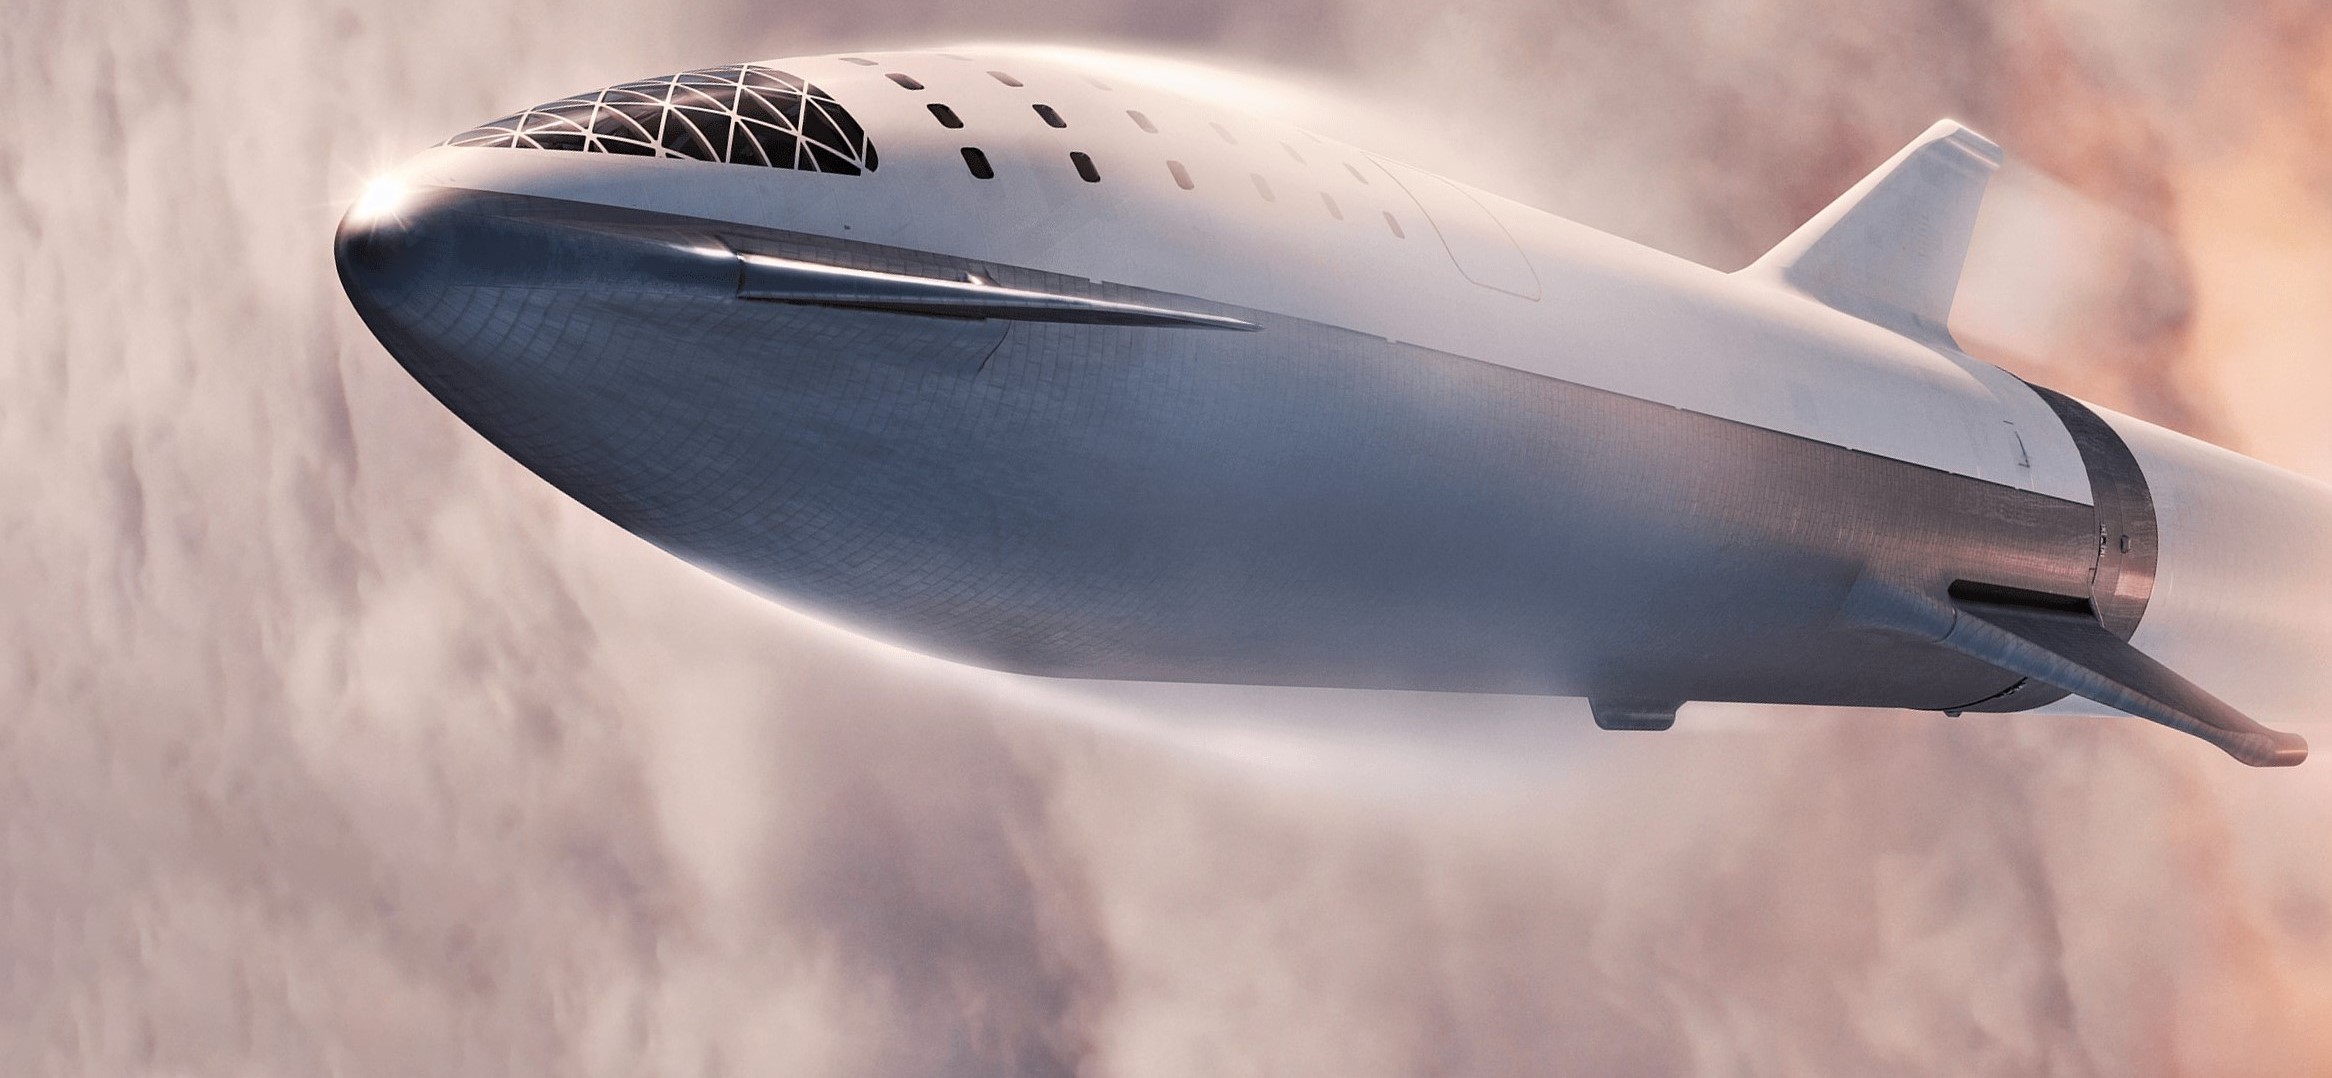 SpaceX's BFR program pursuing advanced Starship heat shield with NASA help